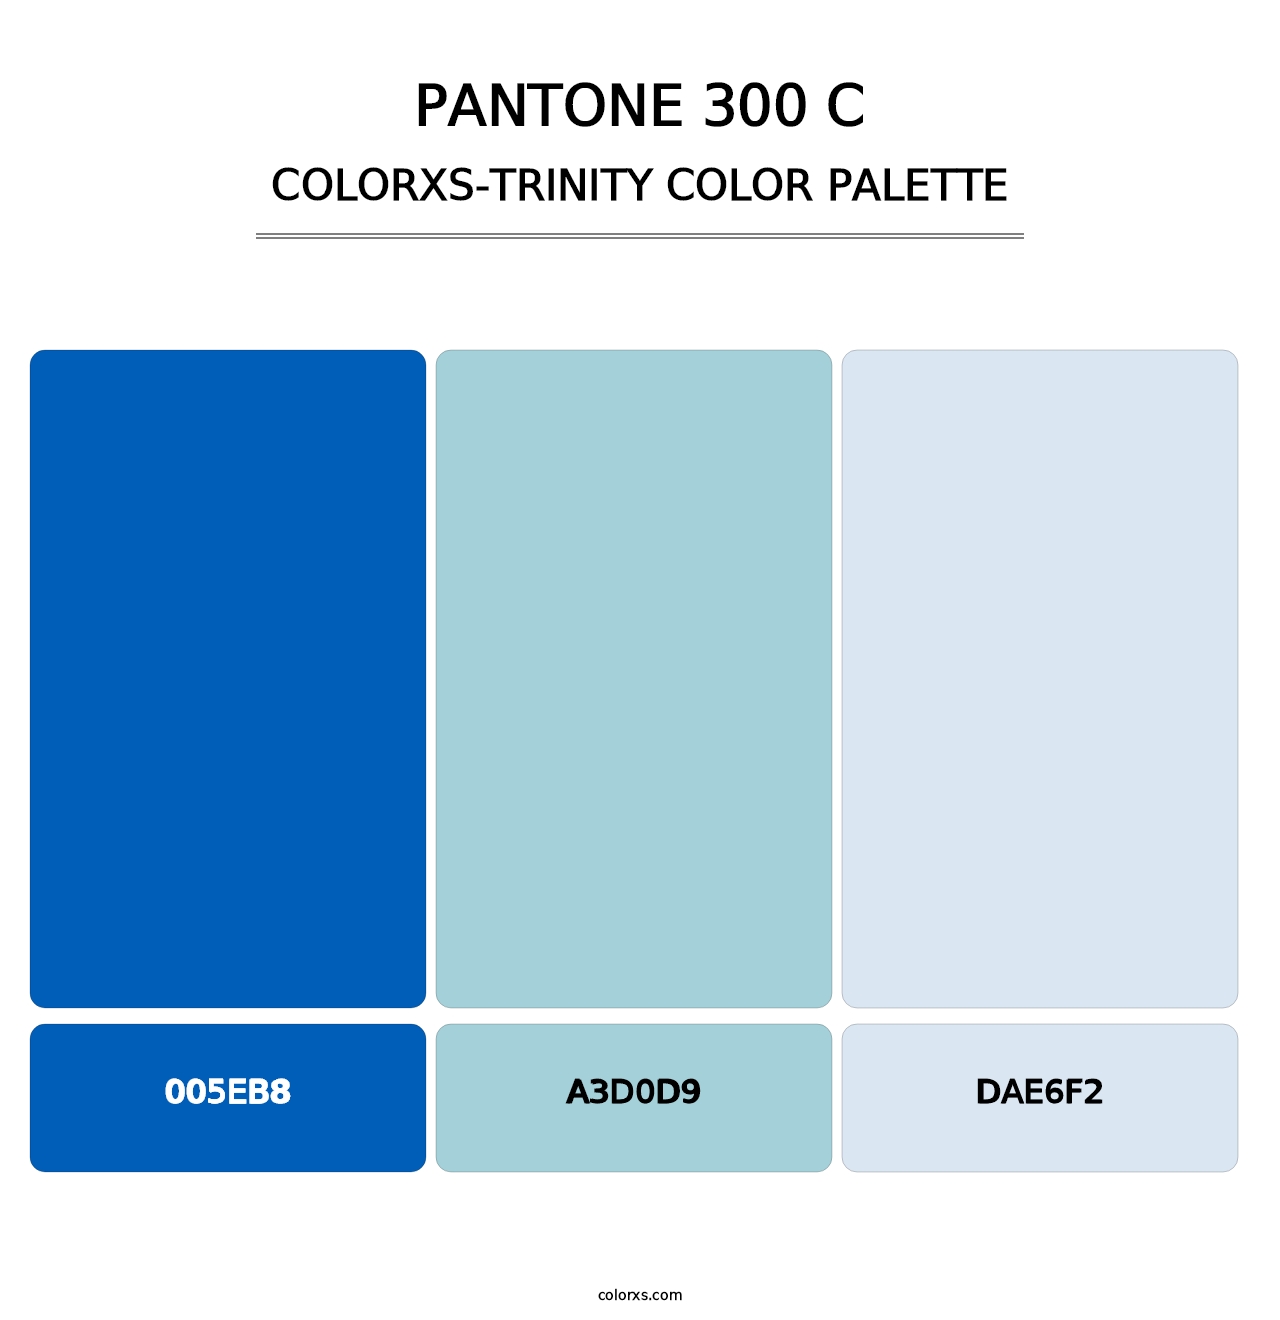 PANTONE 300 C - Colorxs Trinity Palette